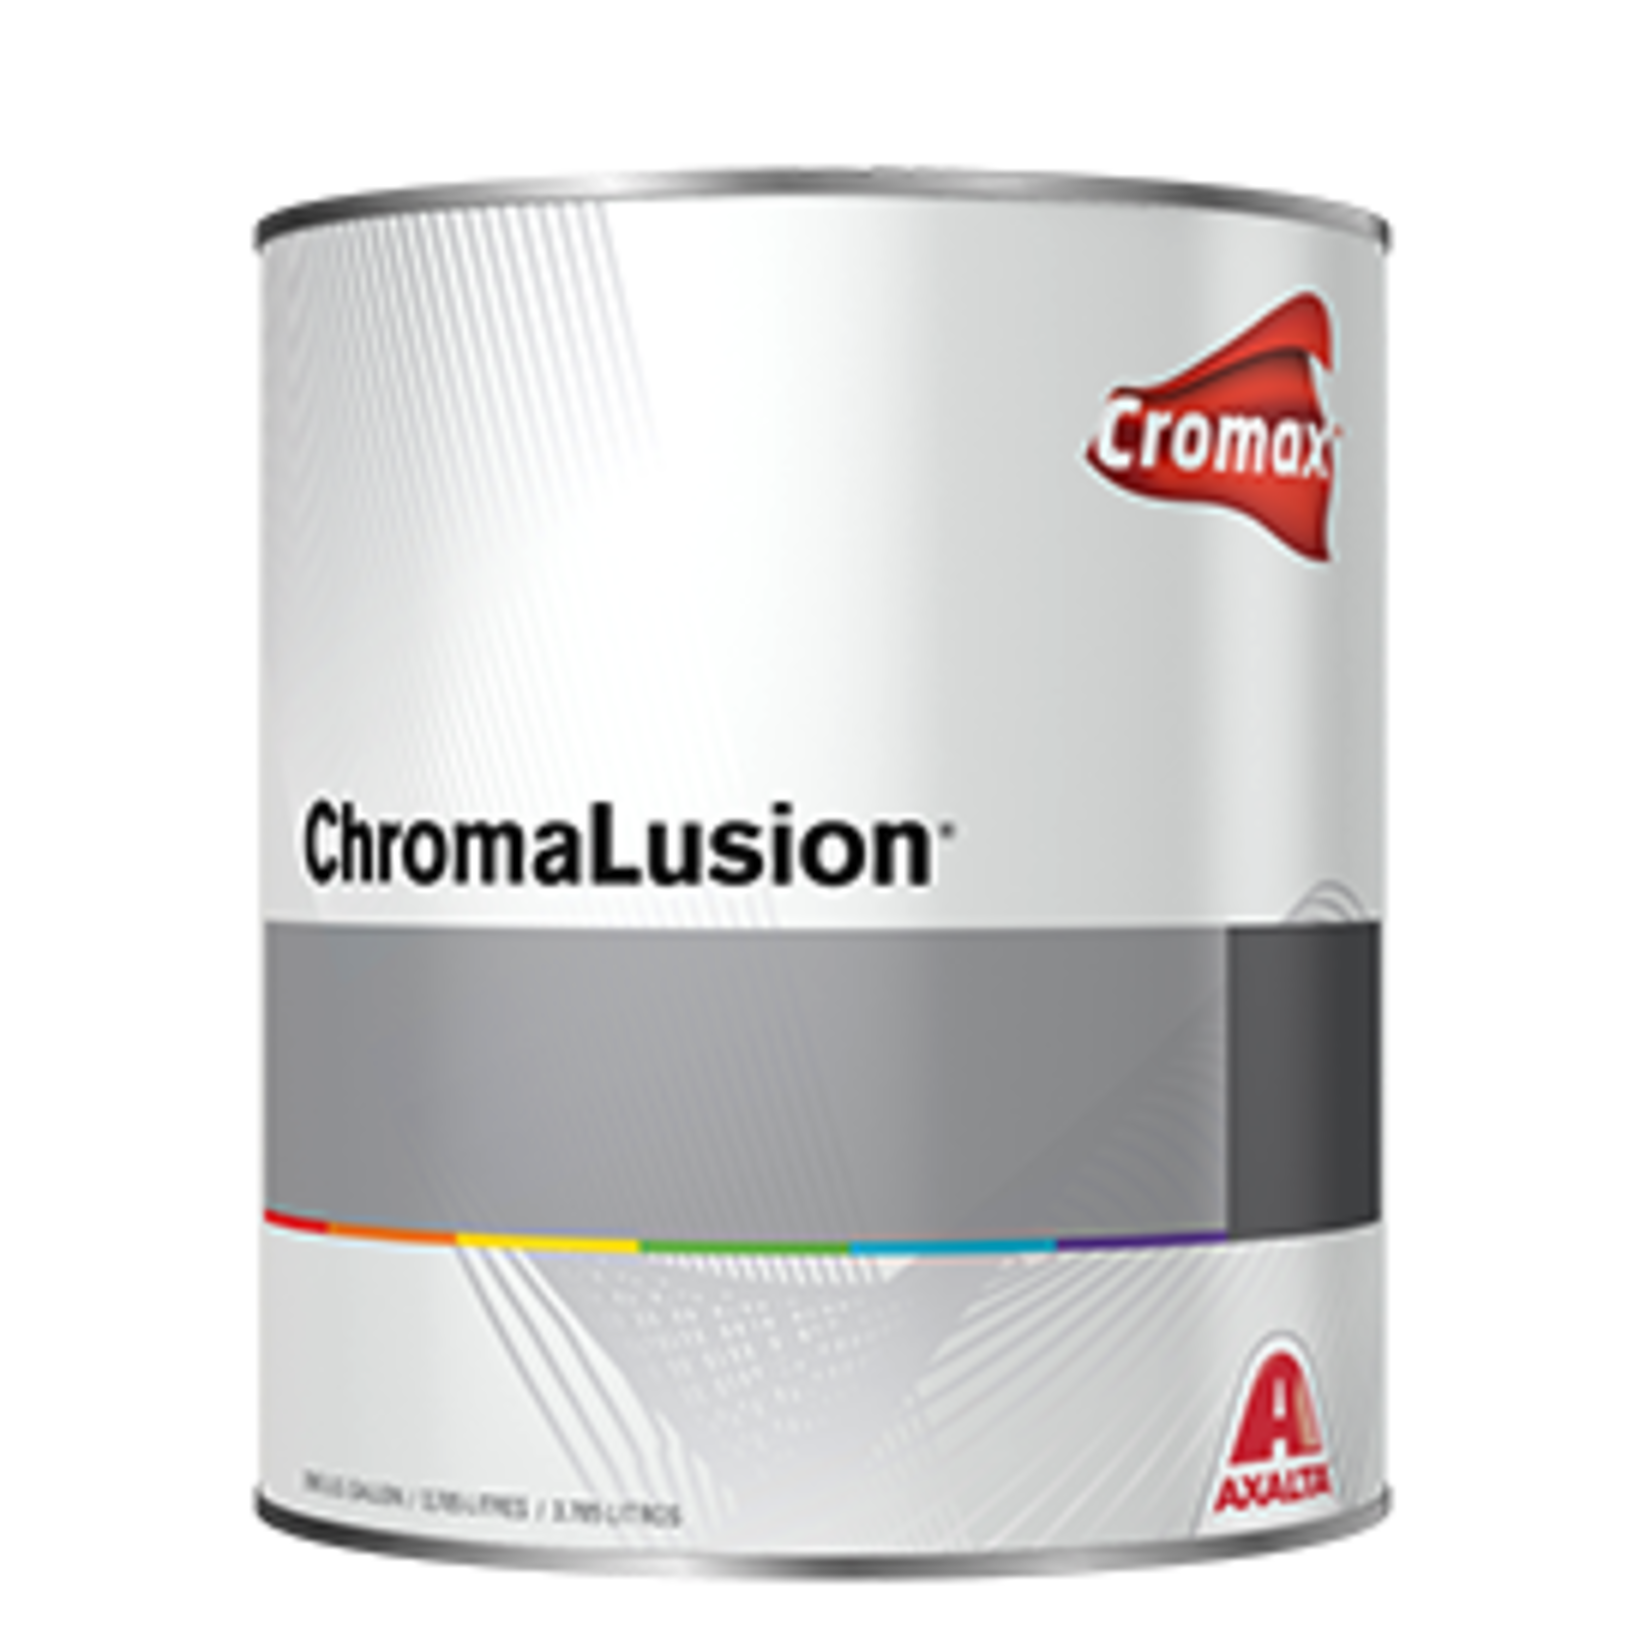 Axalta Cromax ChromaLusion Pro